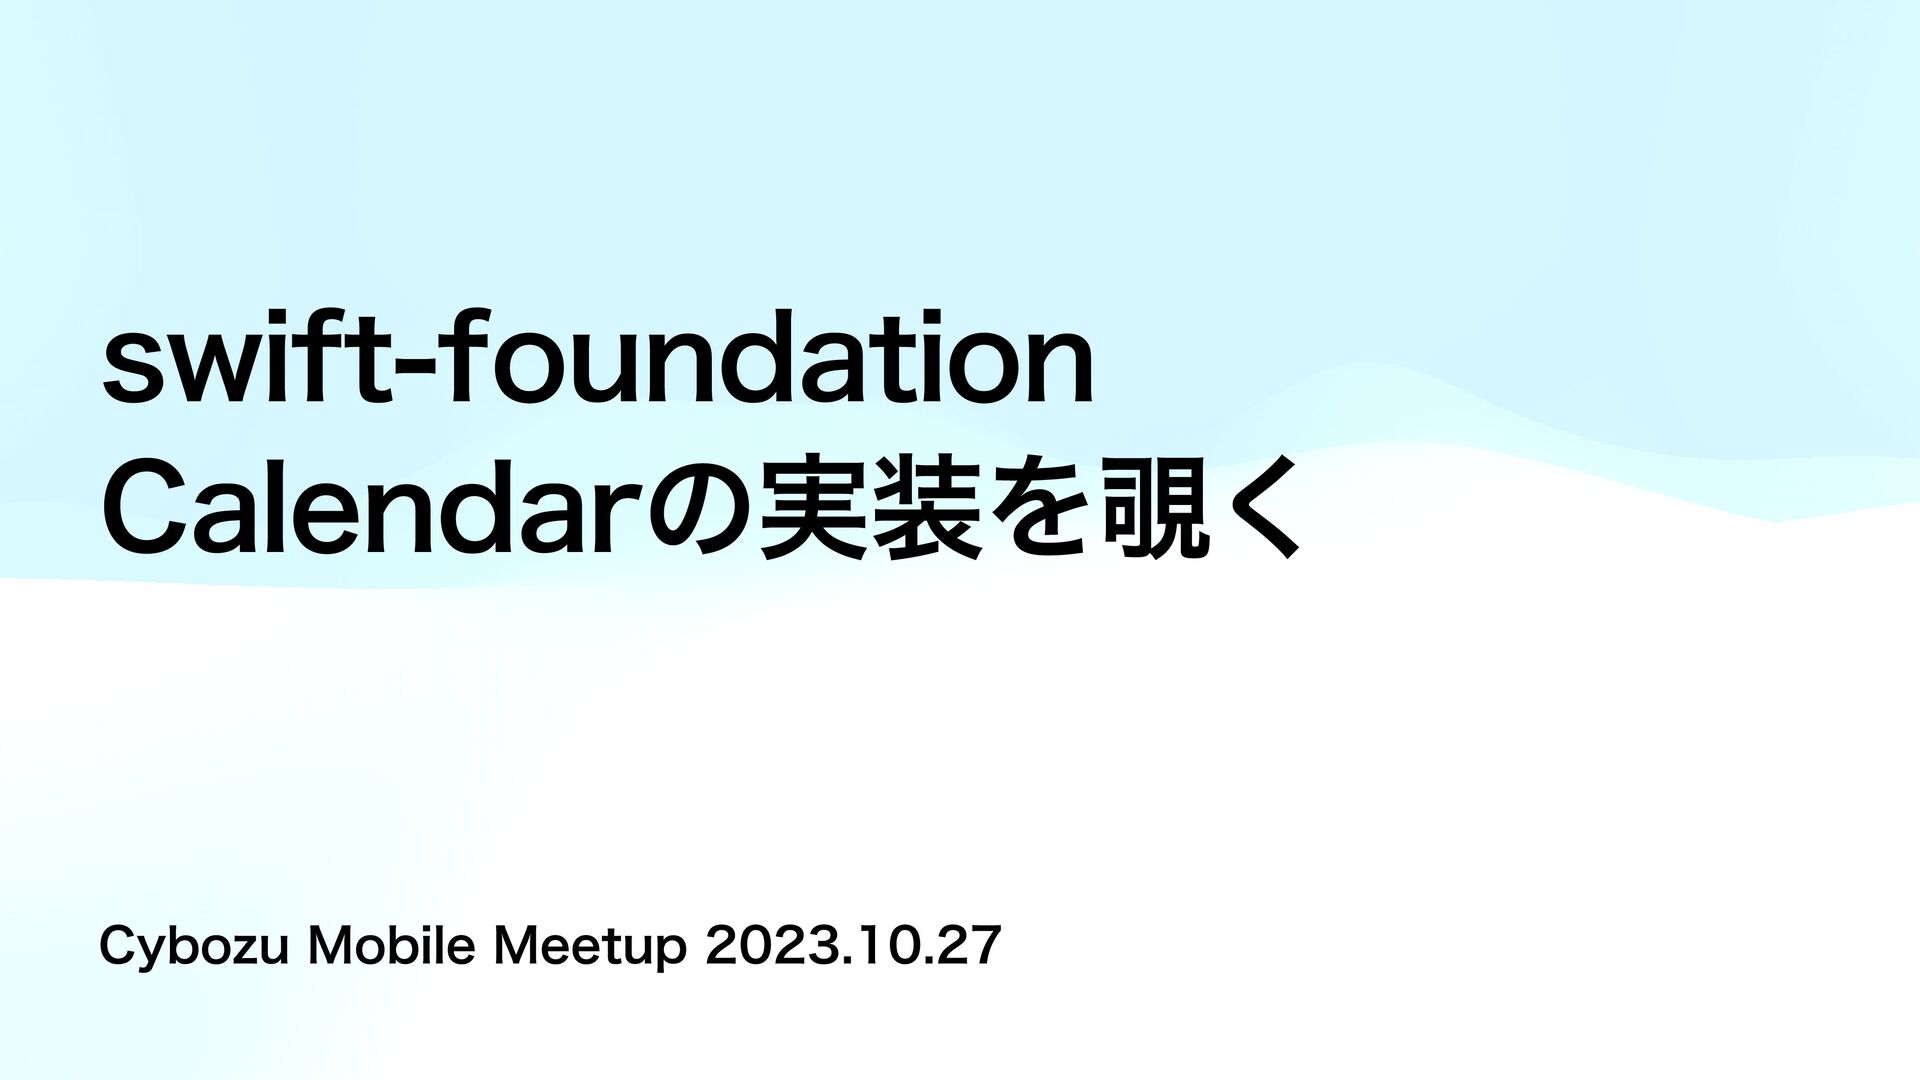 Slide Top: Peek in Calendar implementation of swift-foundation